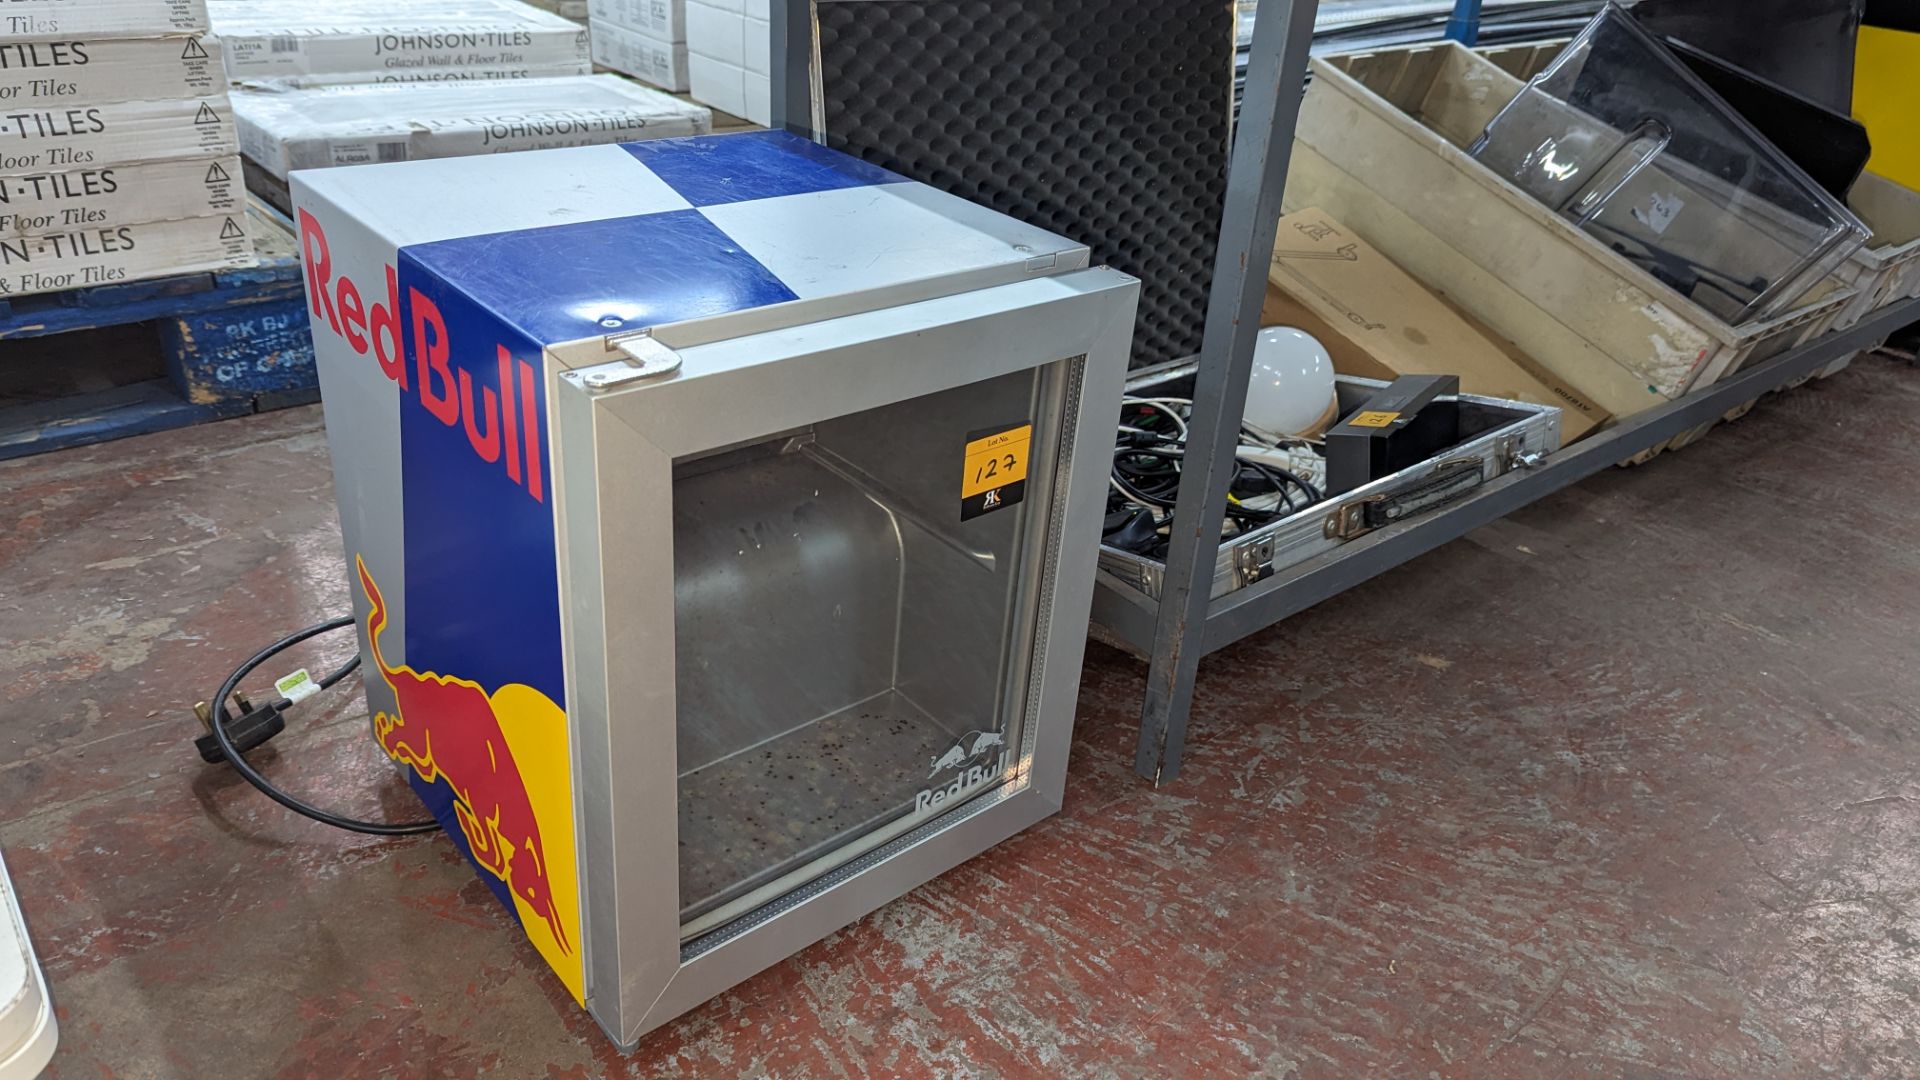 Mini fridge with Red Bull branding - Image 3 of 5